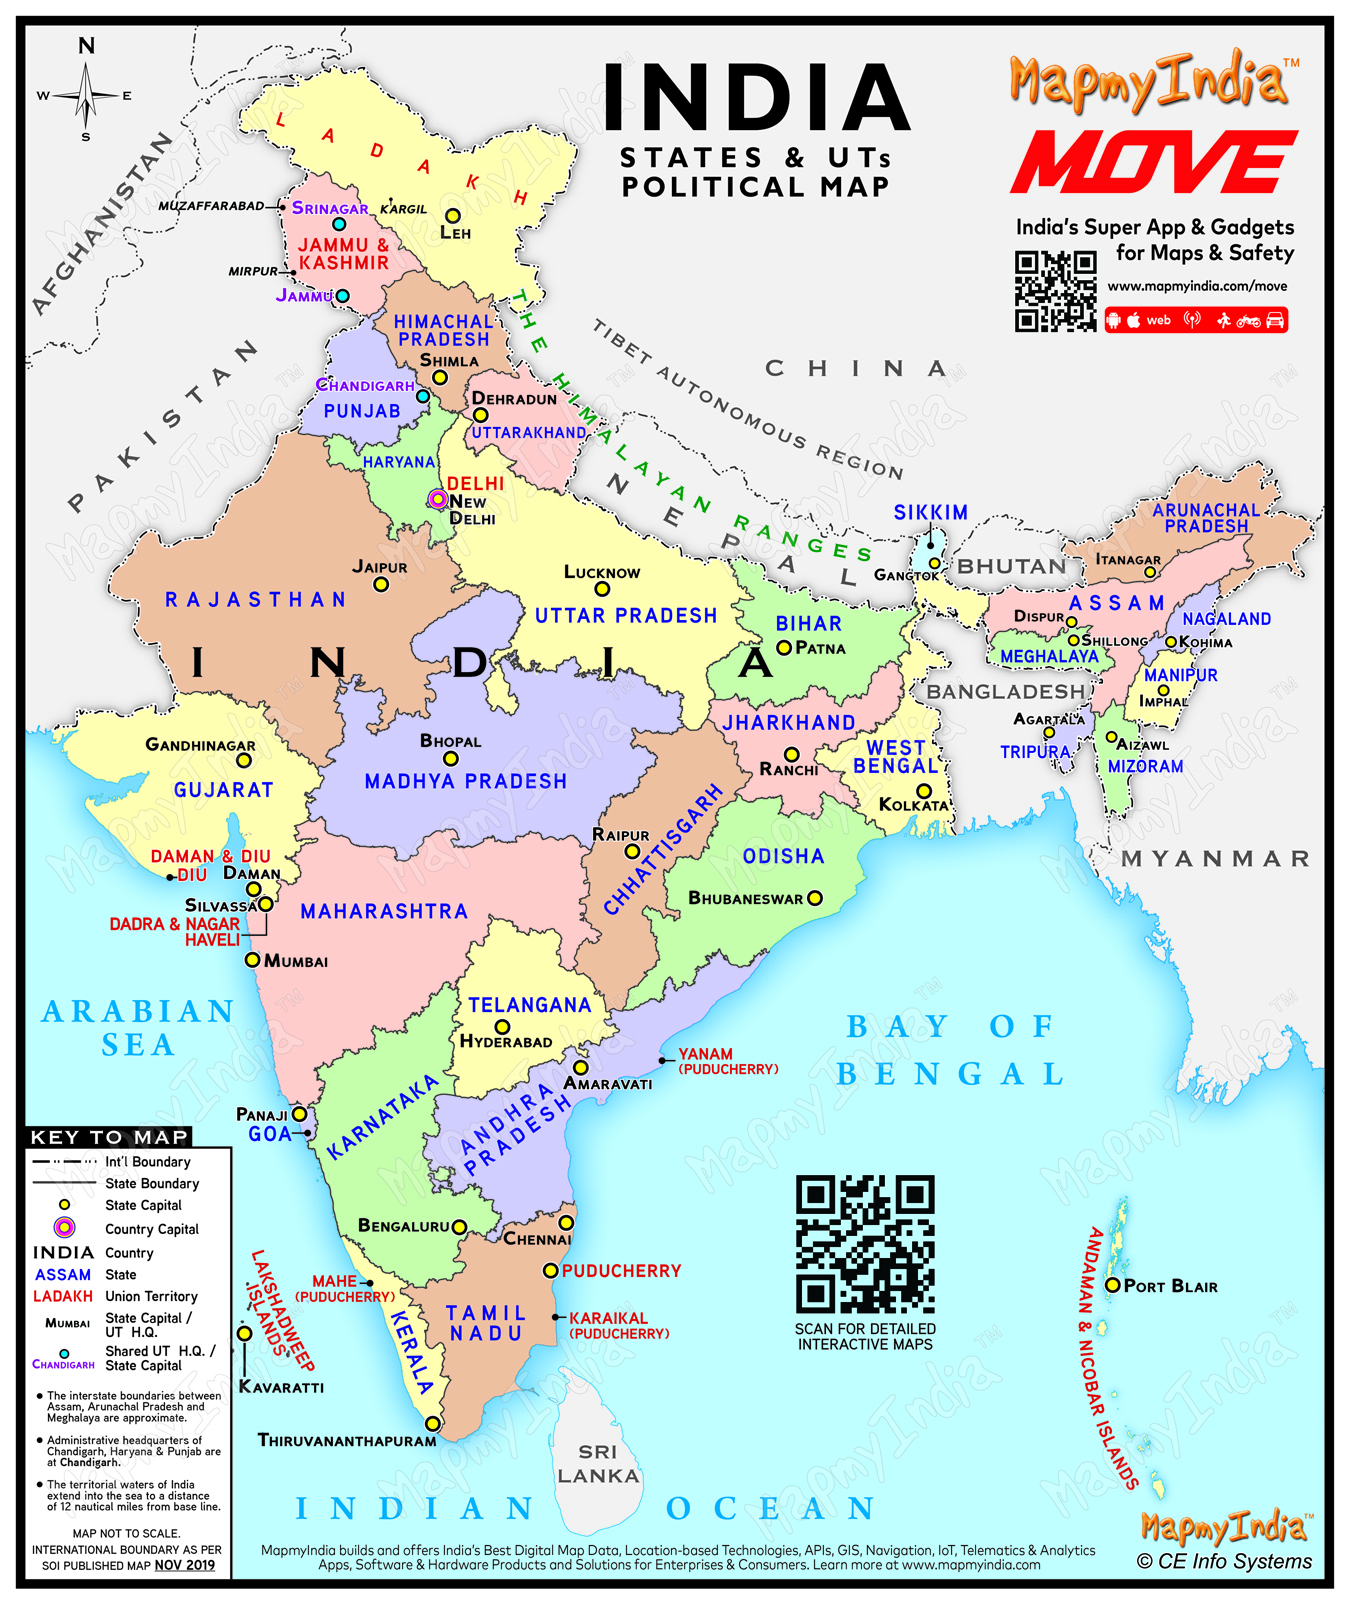 Capital of Bihar (Patna): History, tourism, Economy, Map